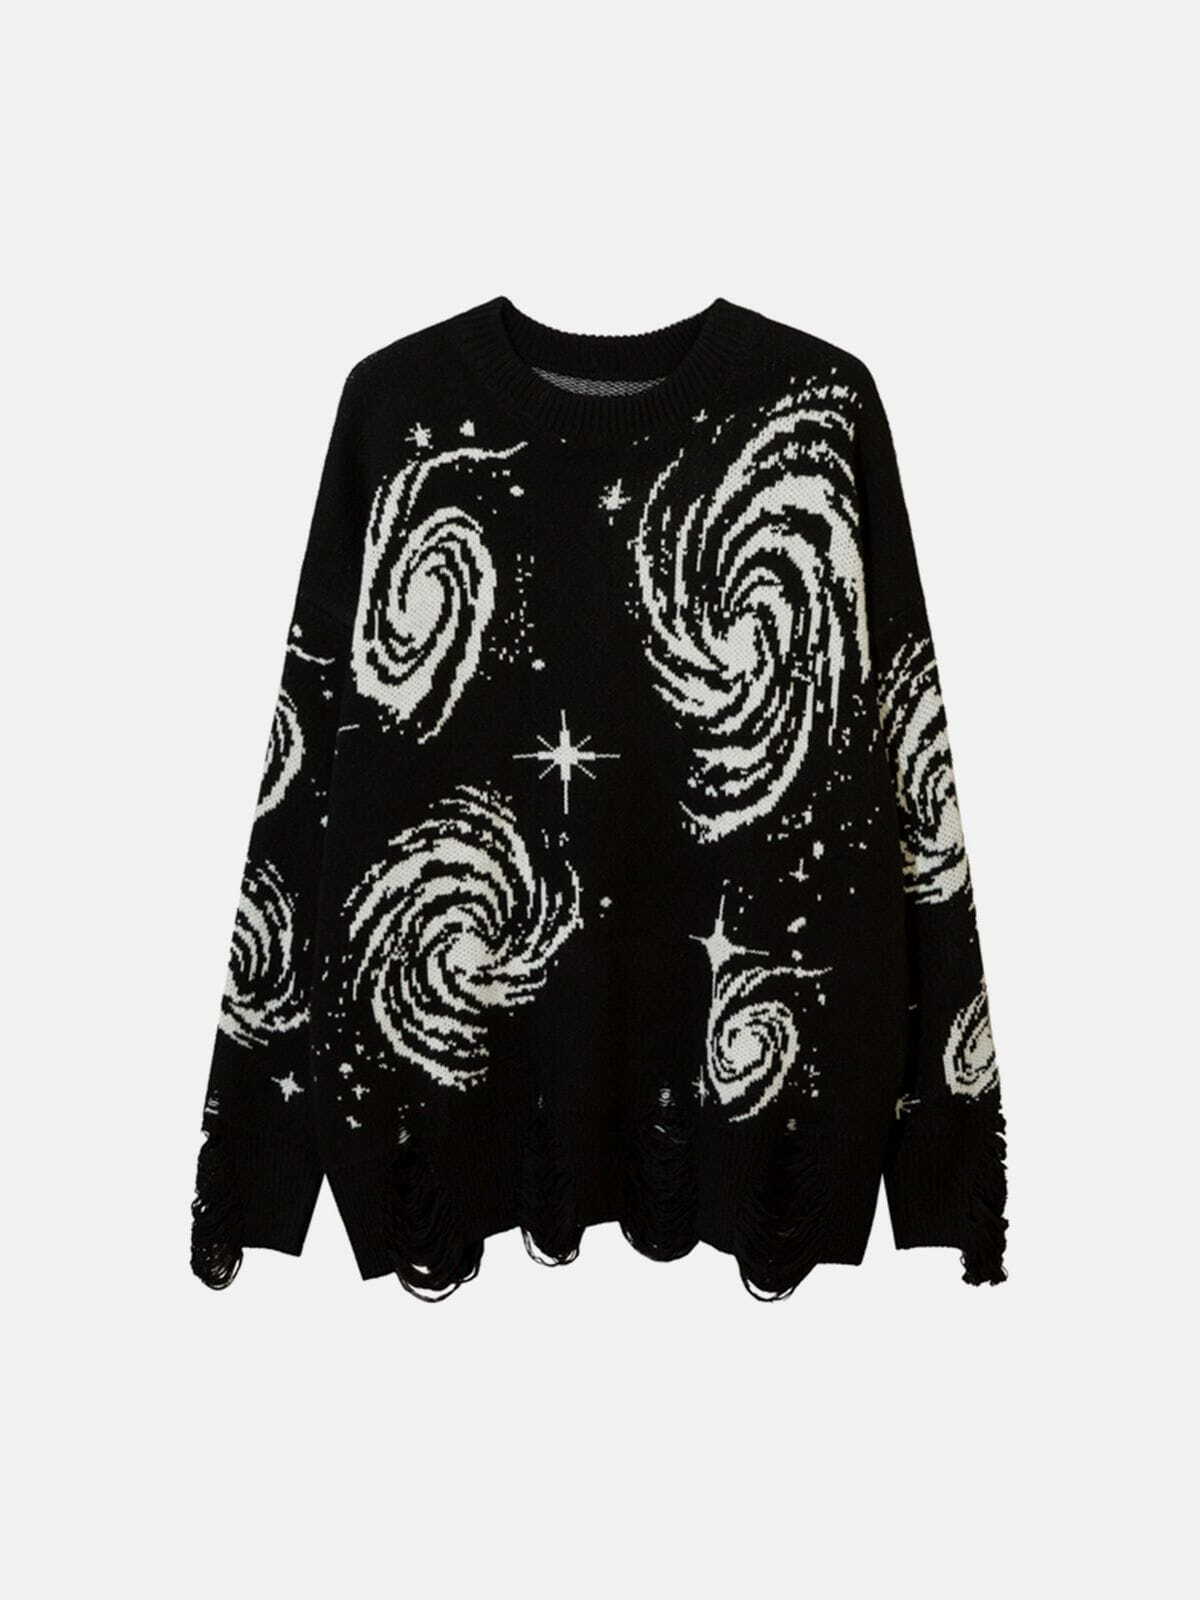 starry night jacquard knit sweater edgy urban streetwear chic 3473